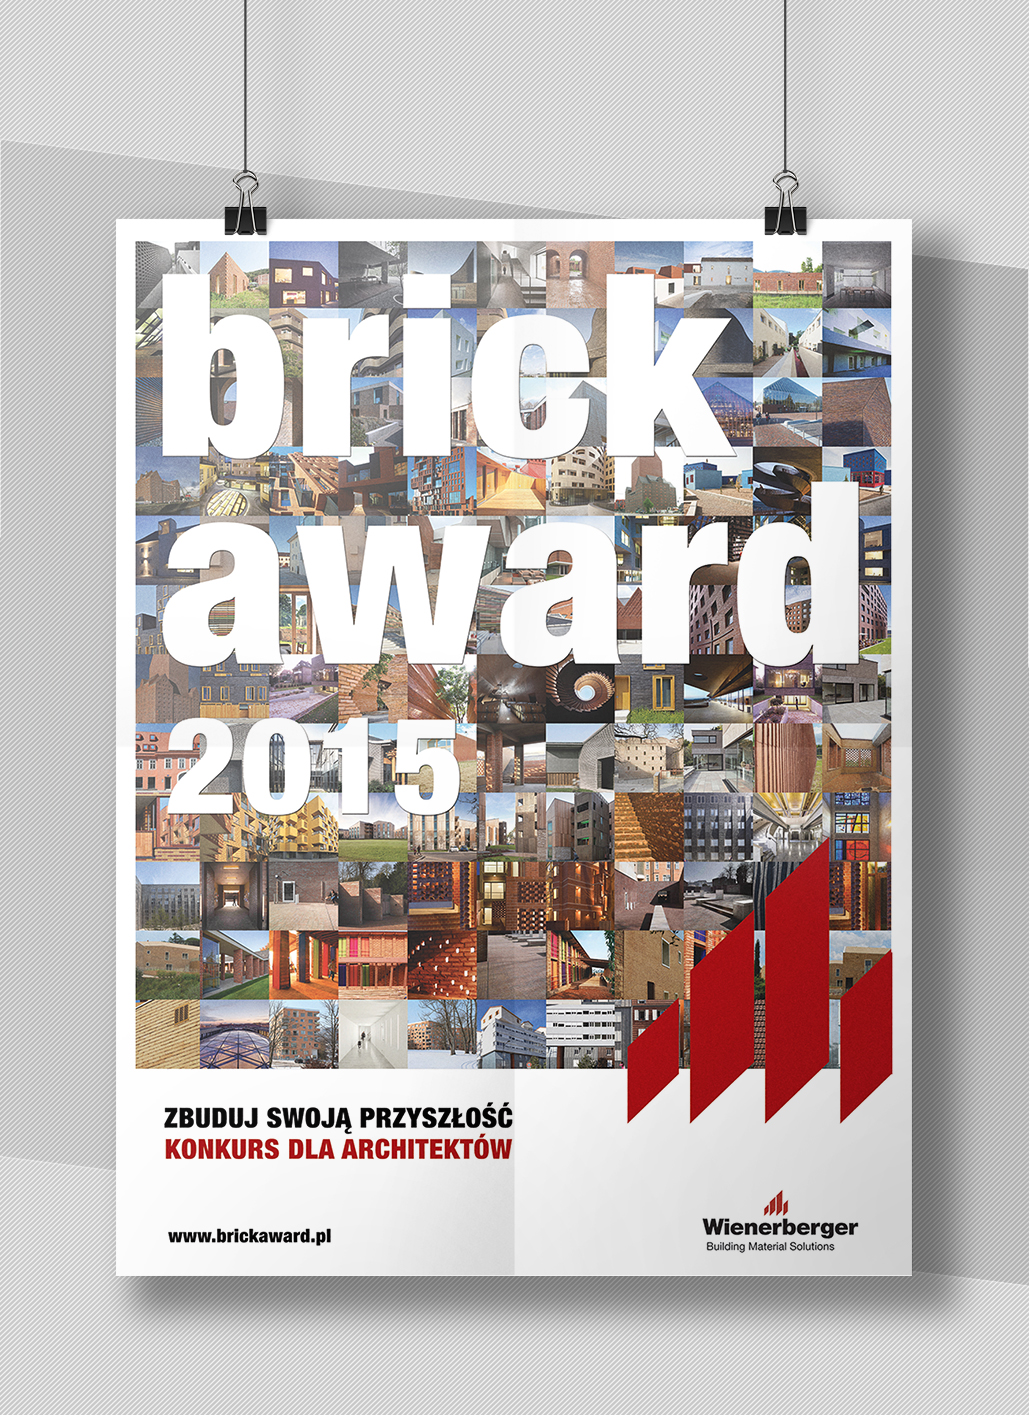 wienerberger-brick-award-poster2